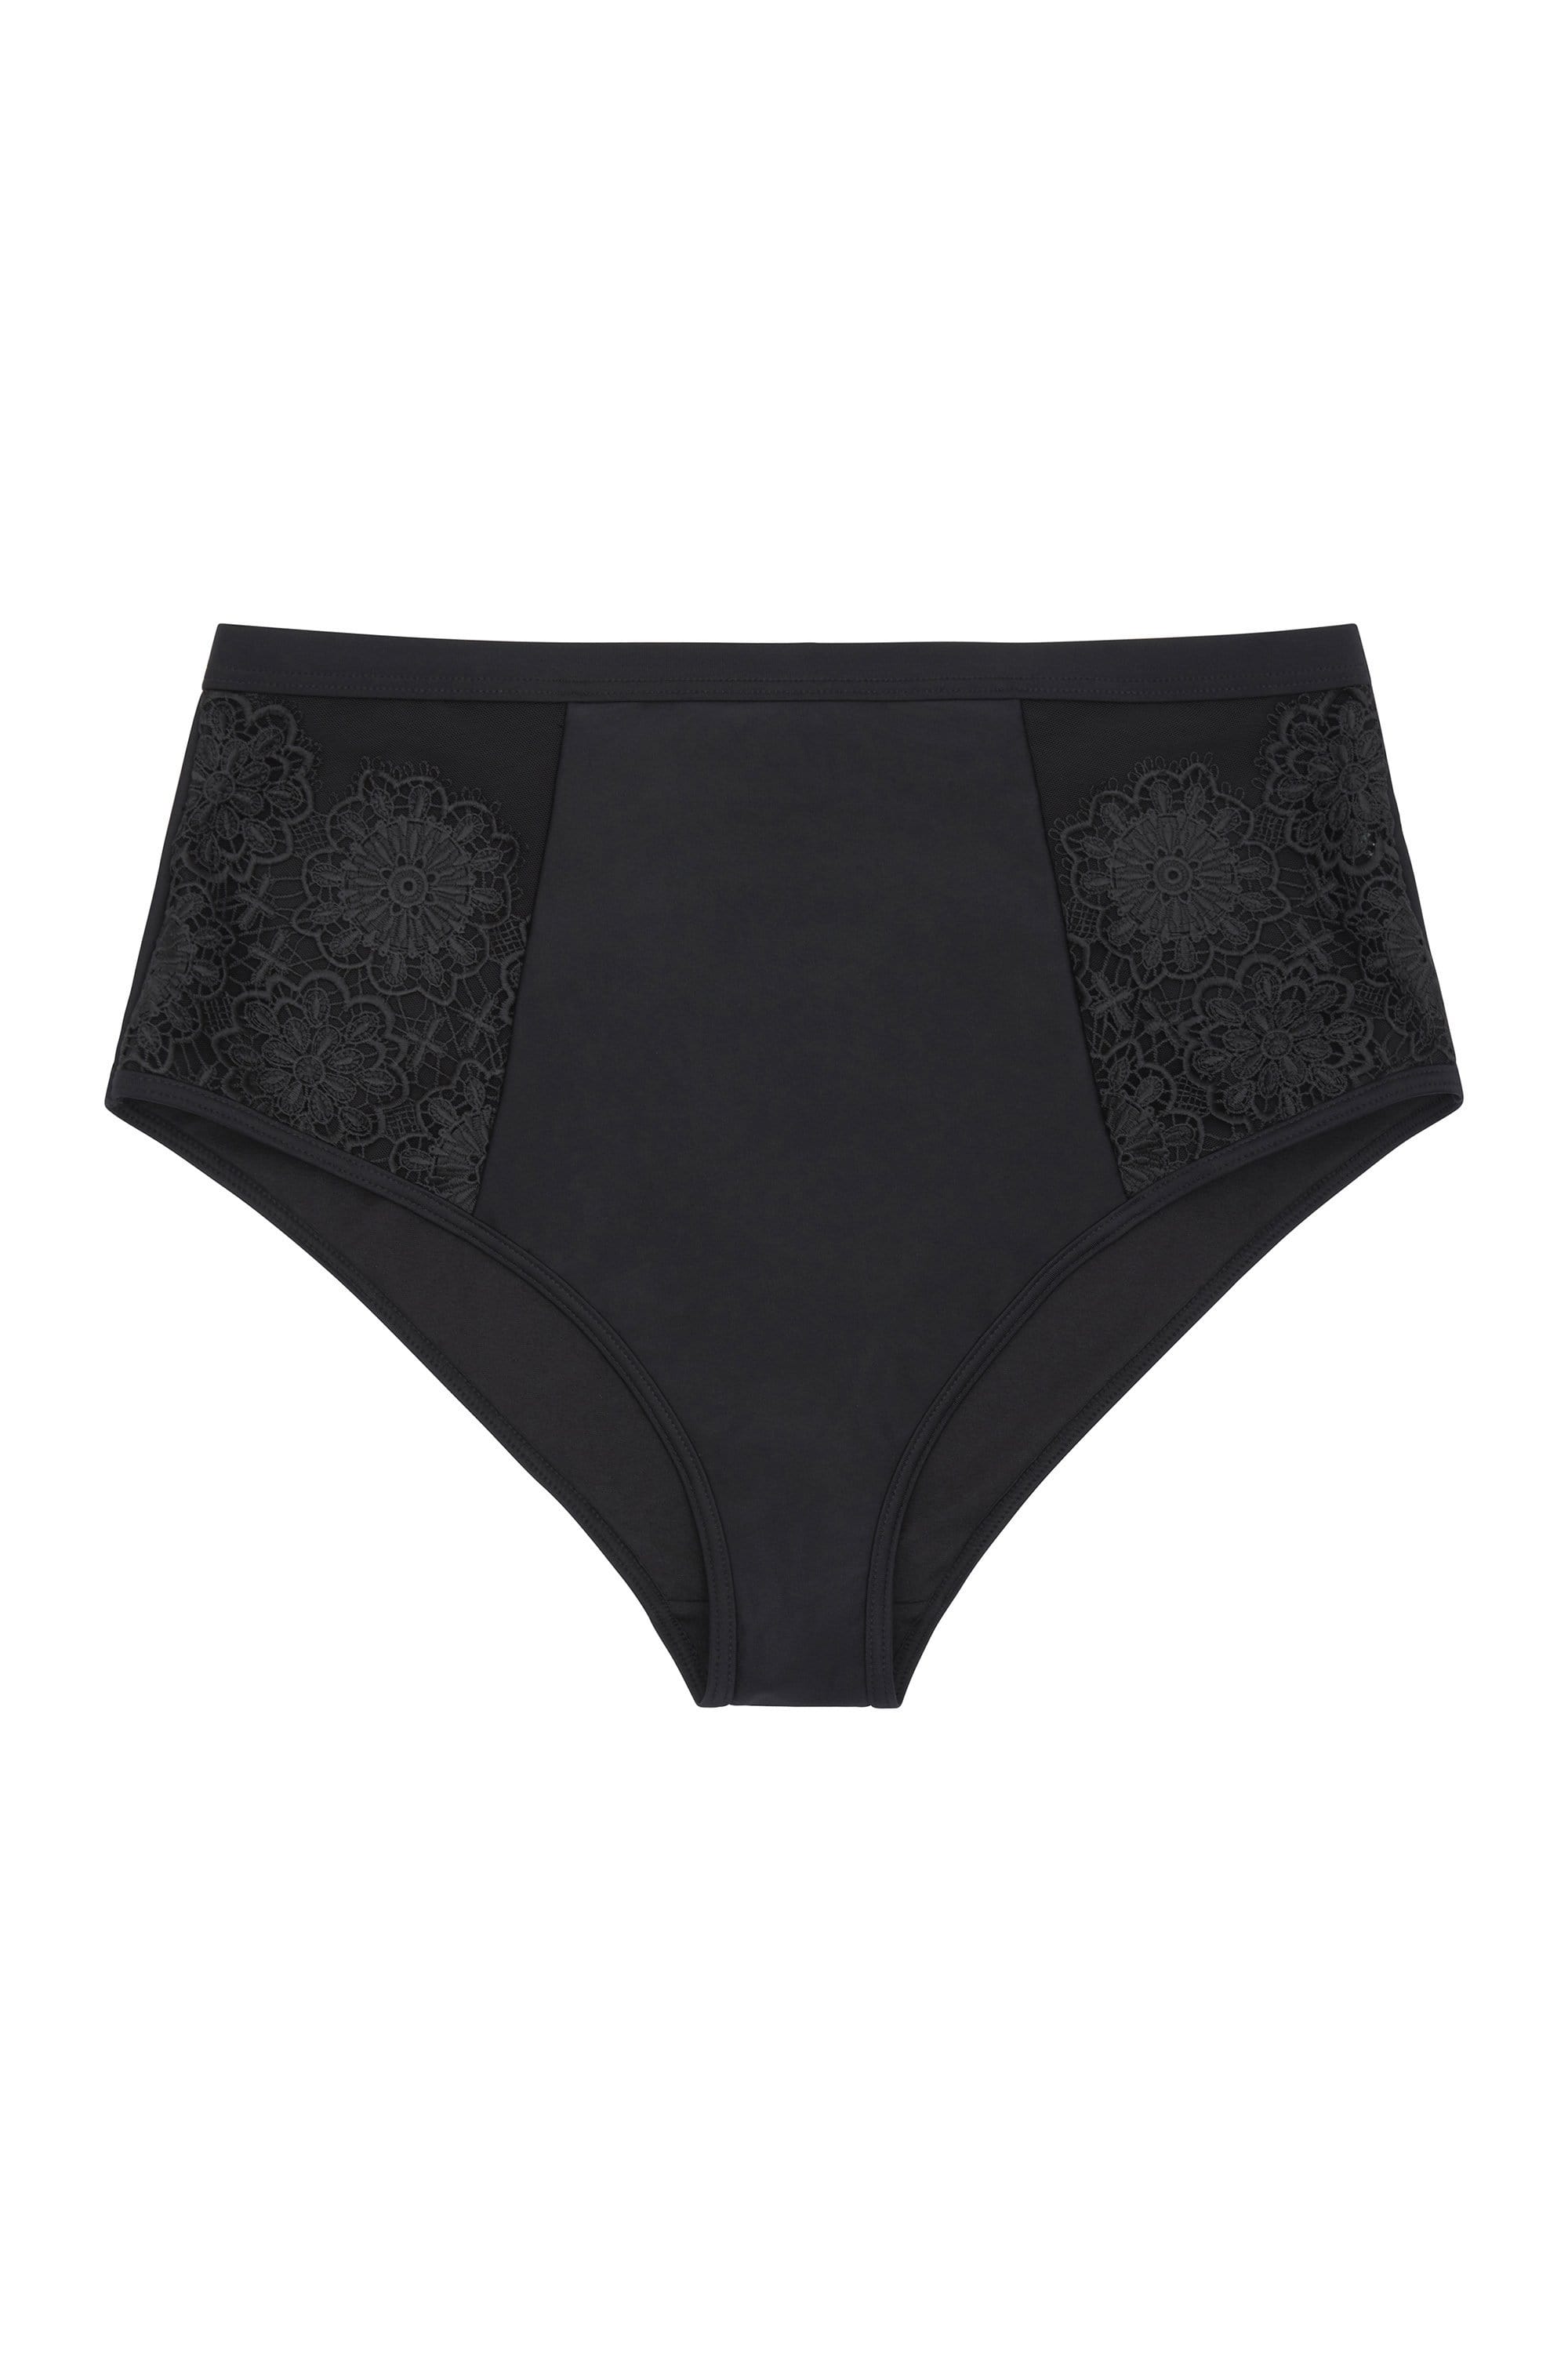 Hunter McGrady Plus Size/Curve Black Lace Panelled Bikini Bottom ...